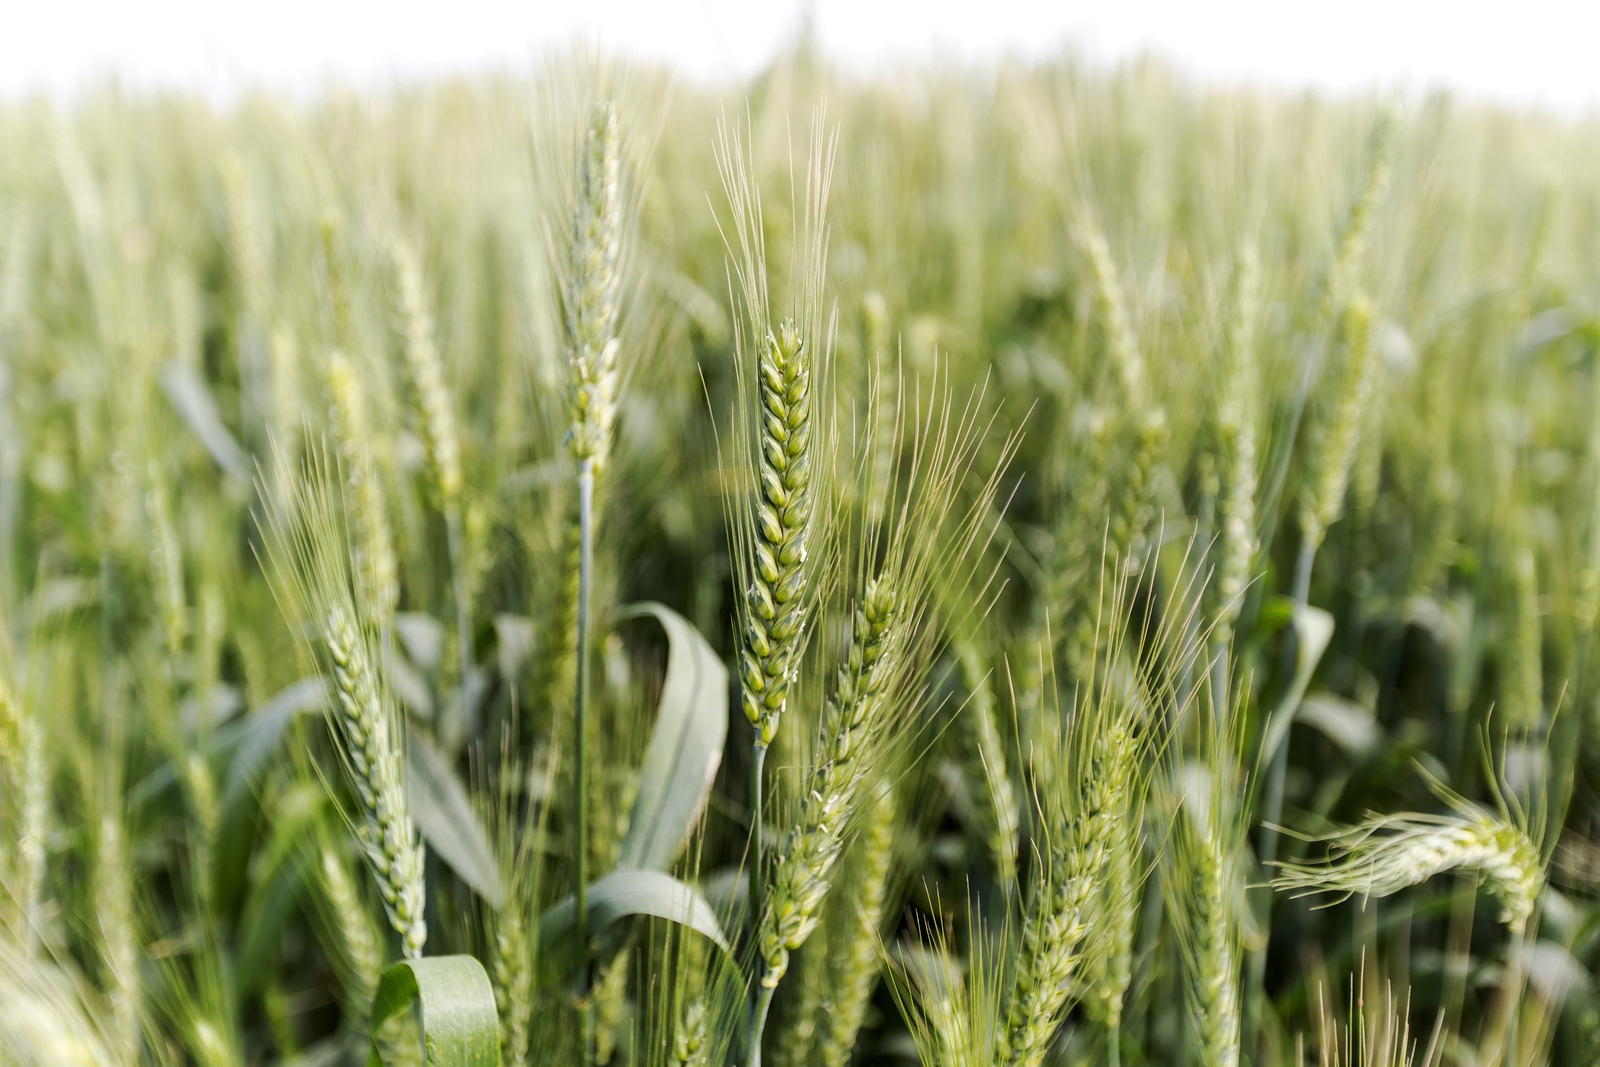 Wheat blast threatens Asian agriculture